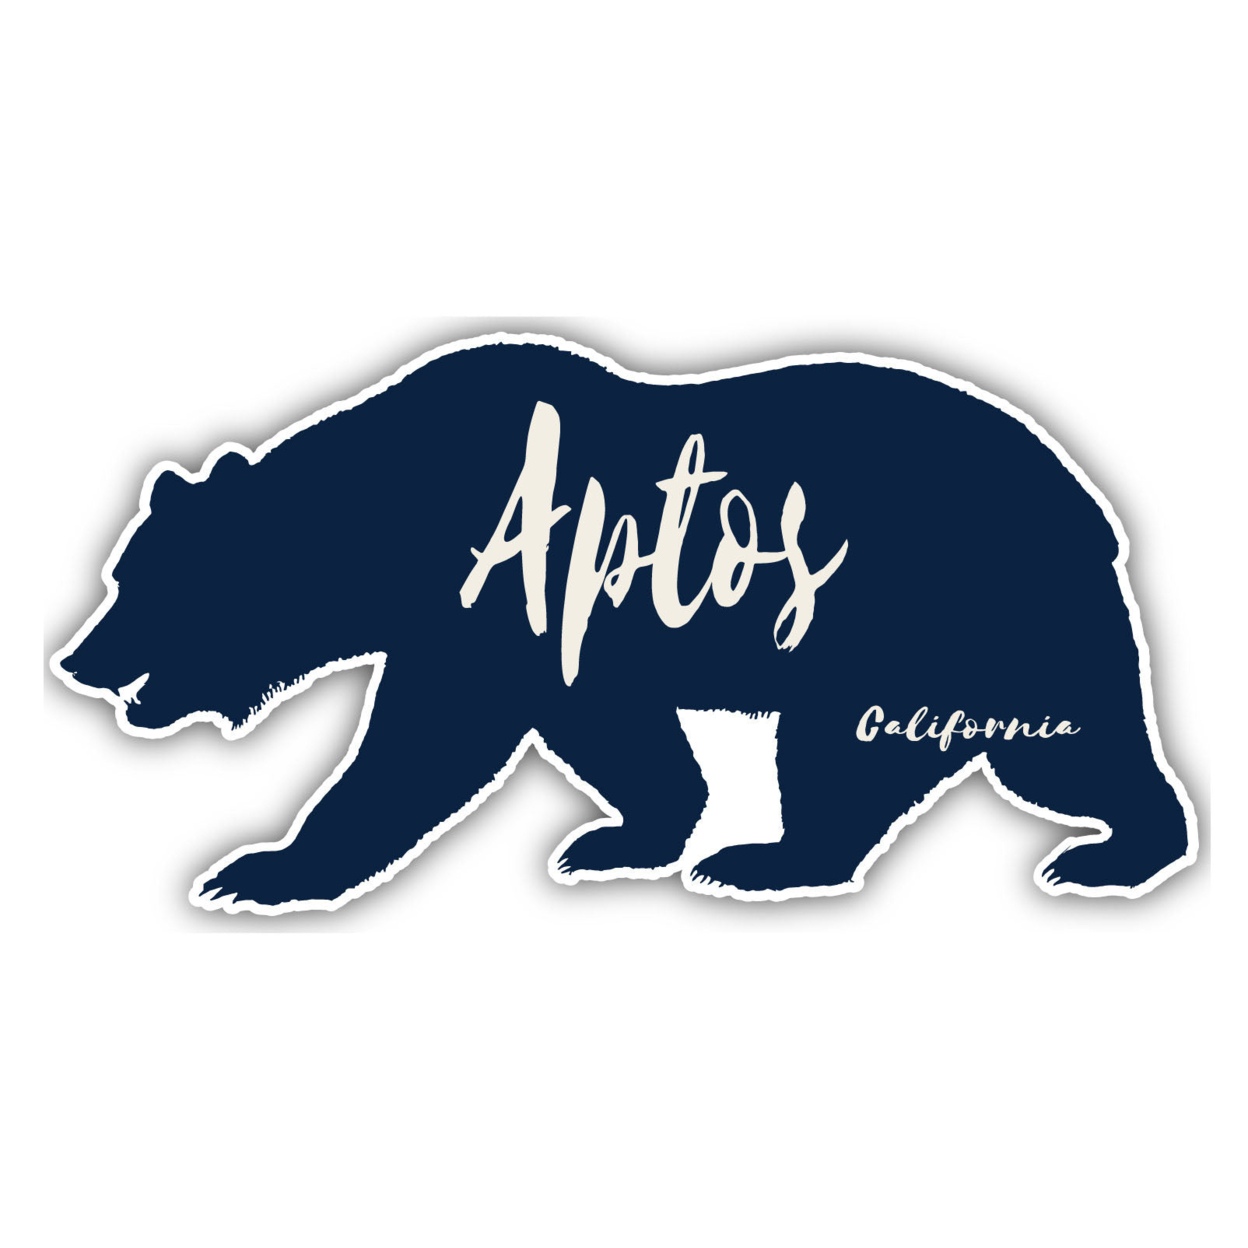 Aptos California Souvenir Decorative Stickers (Choose Theme And Size) - Single Unit, 12-Inch, Bear